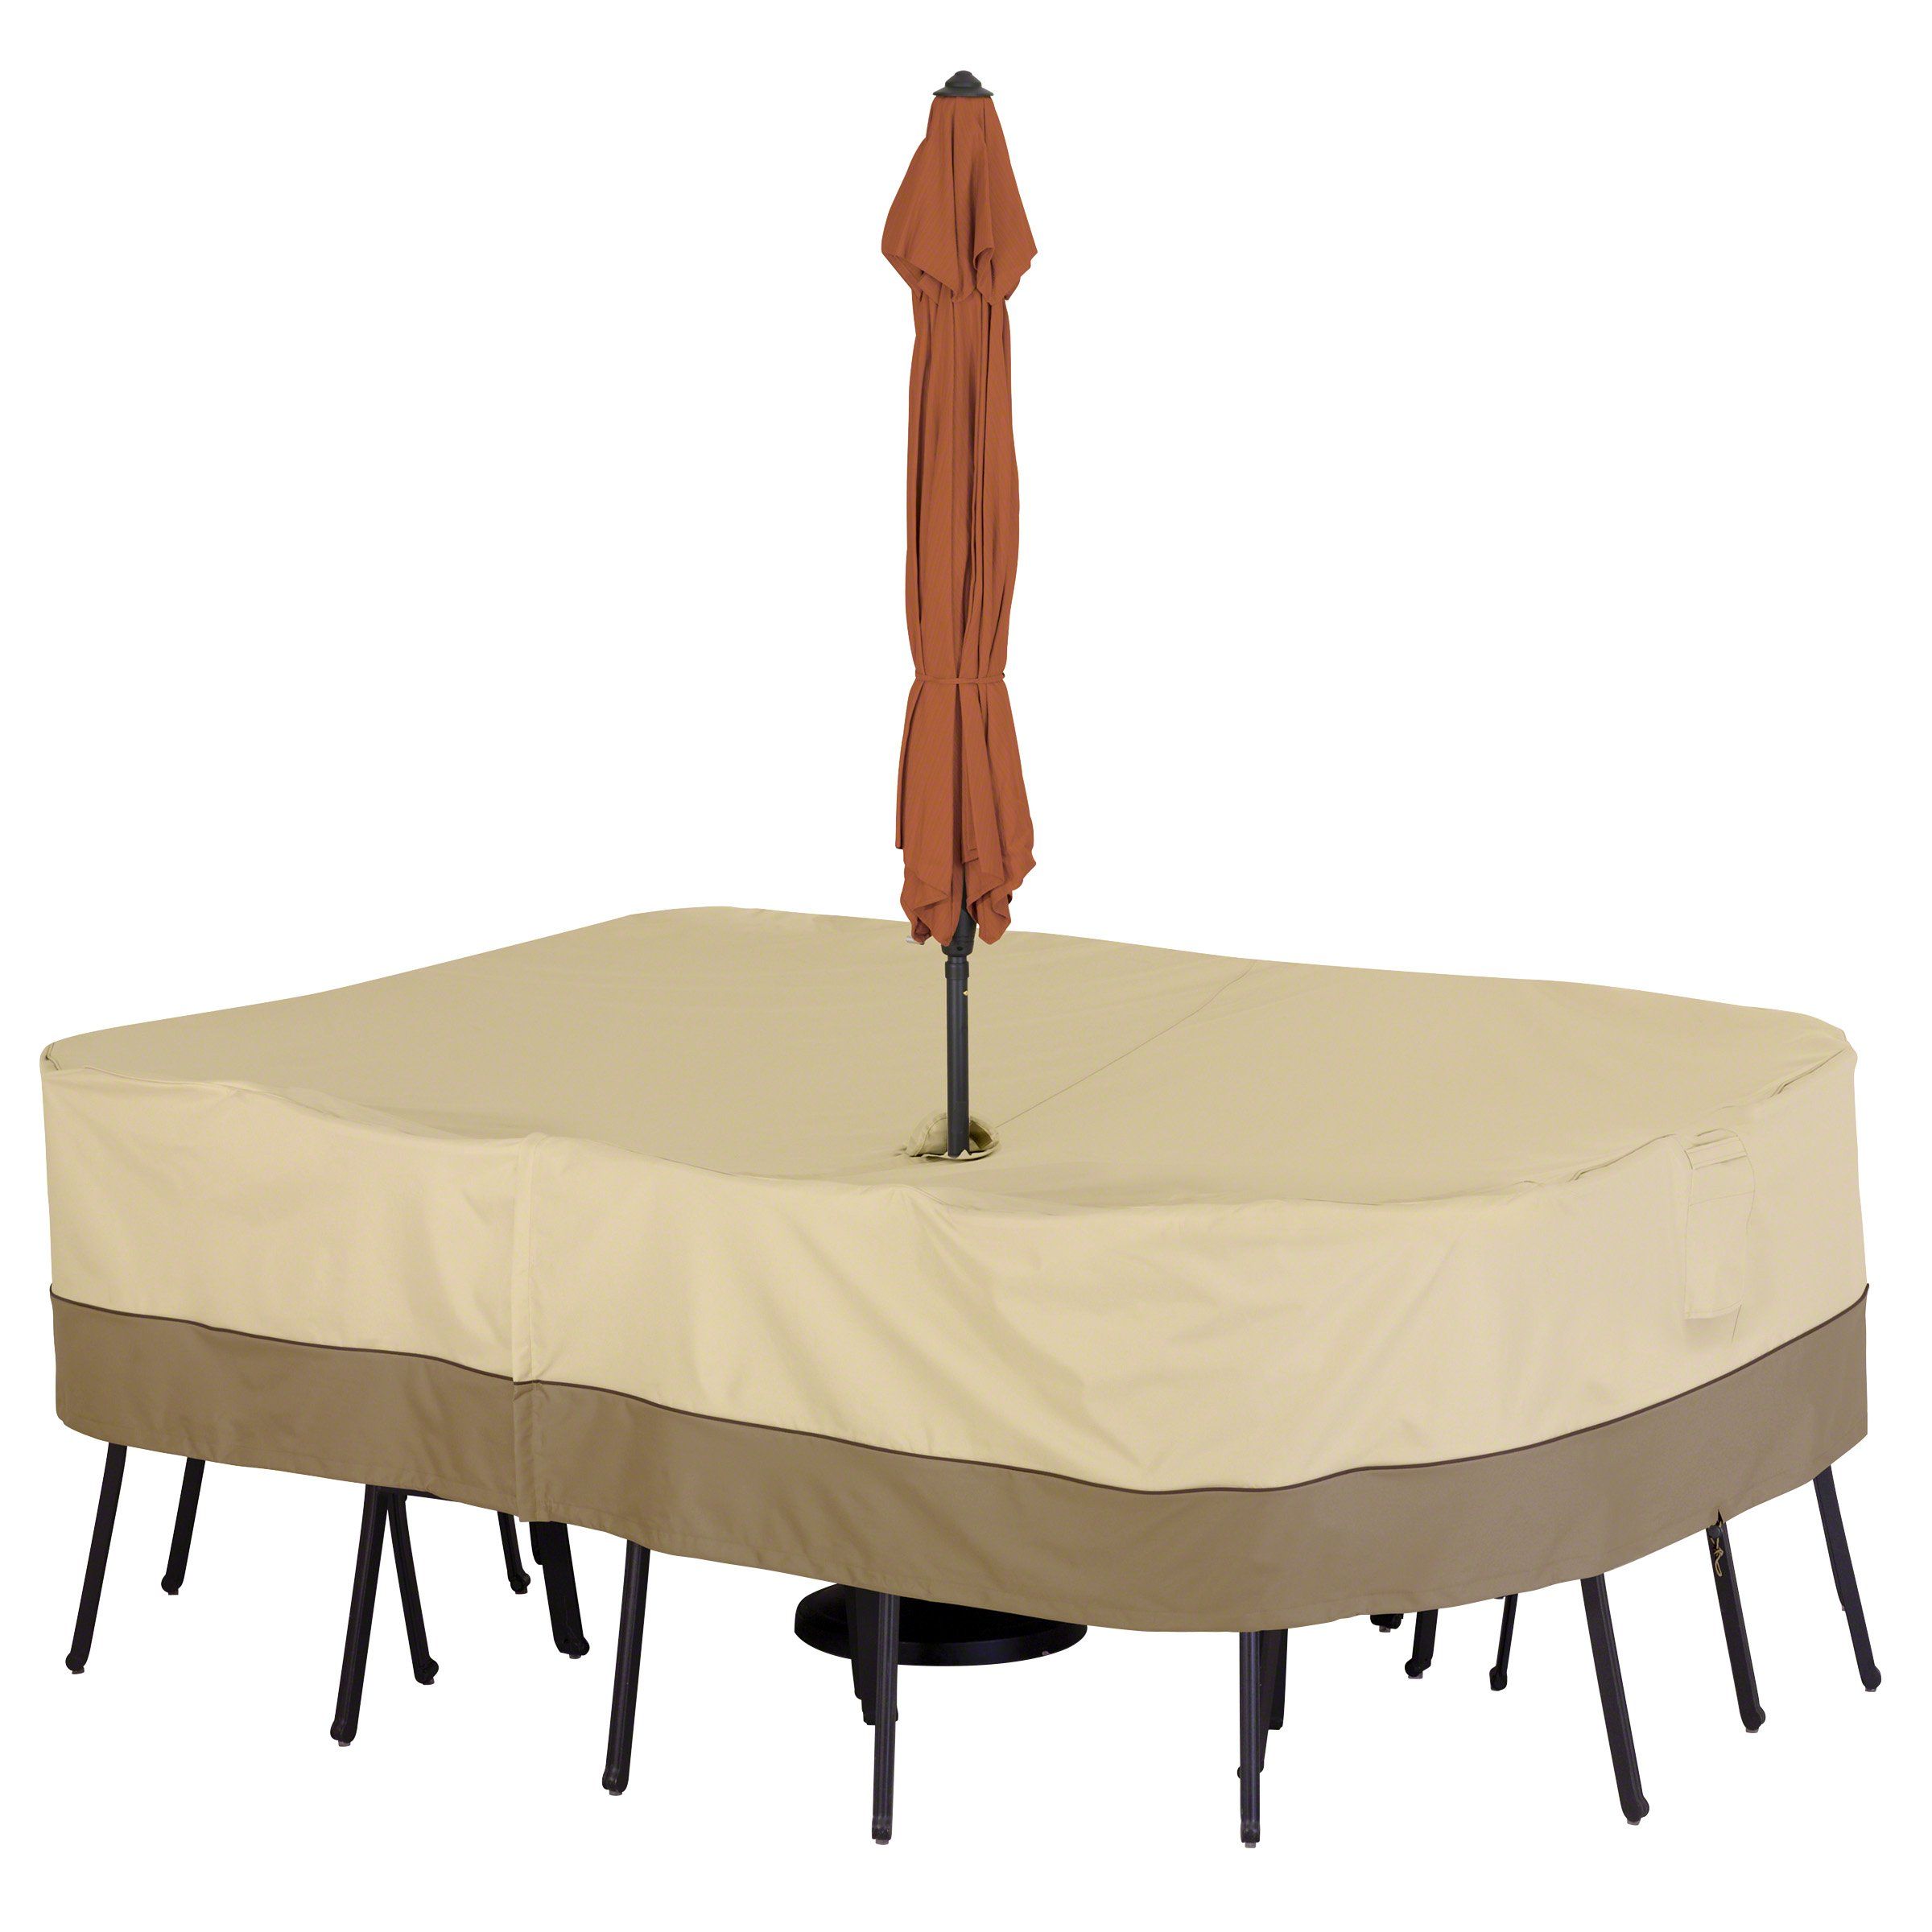 Classic Accessories Veranda Patio Table Cover with Umbrella Hole Pebble/Large/Rectangular/Oval, Outd | Amazon (US)